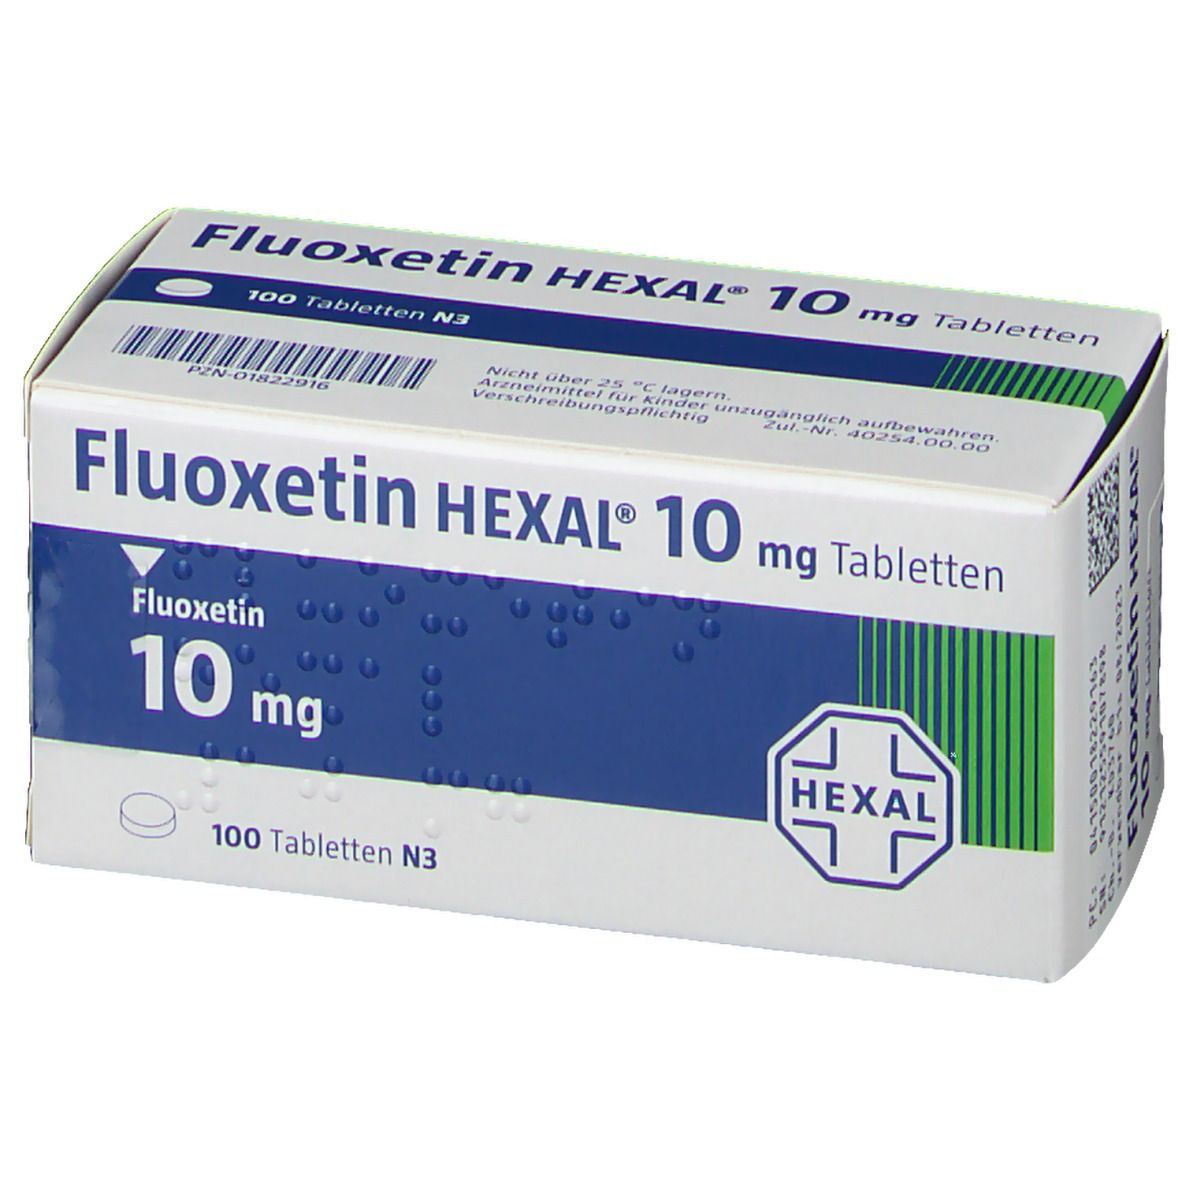 Fluoxetin HEXAL® 10 mg